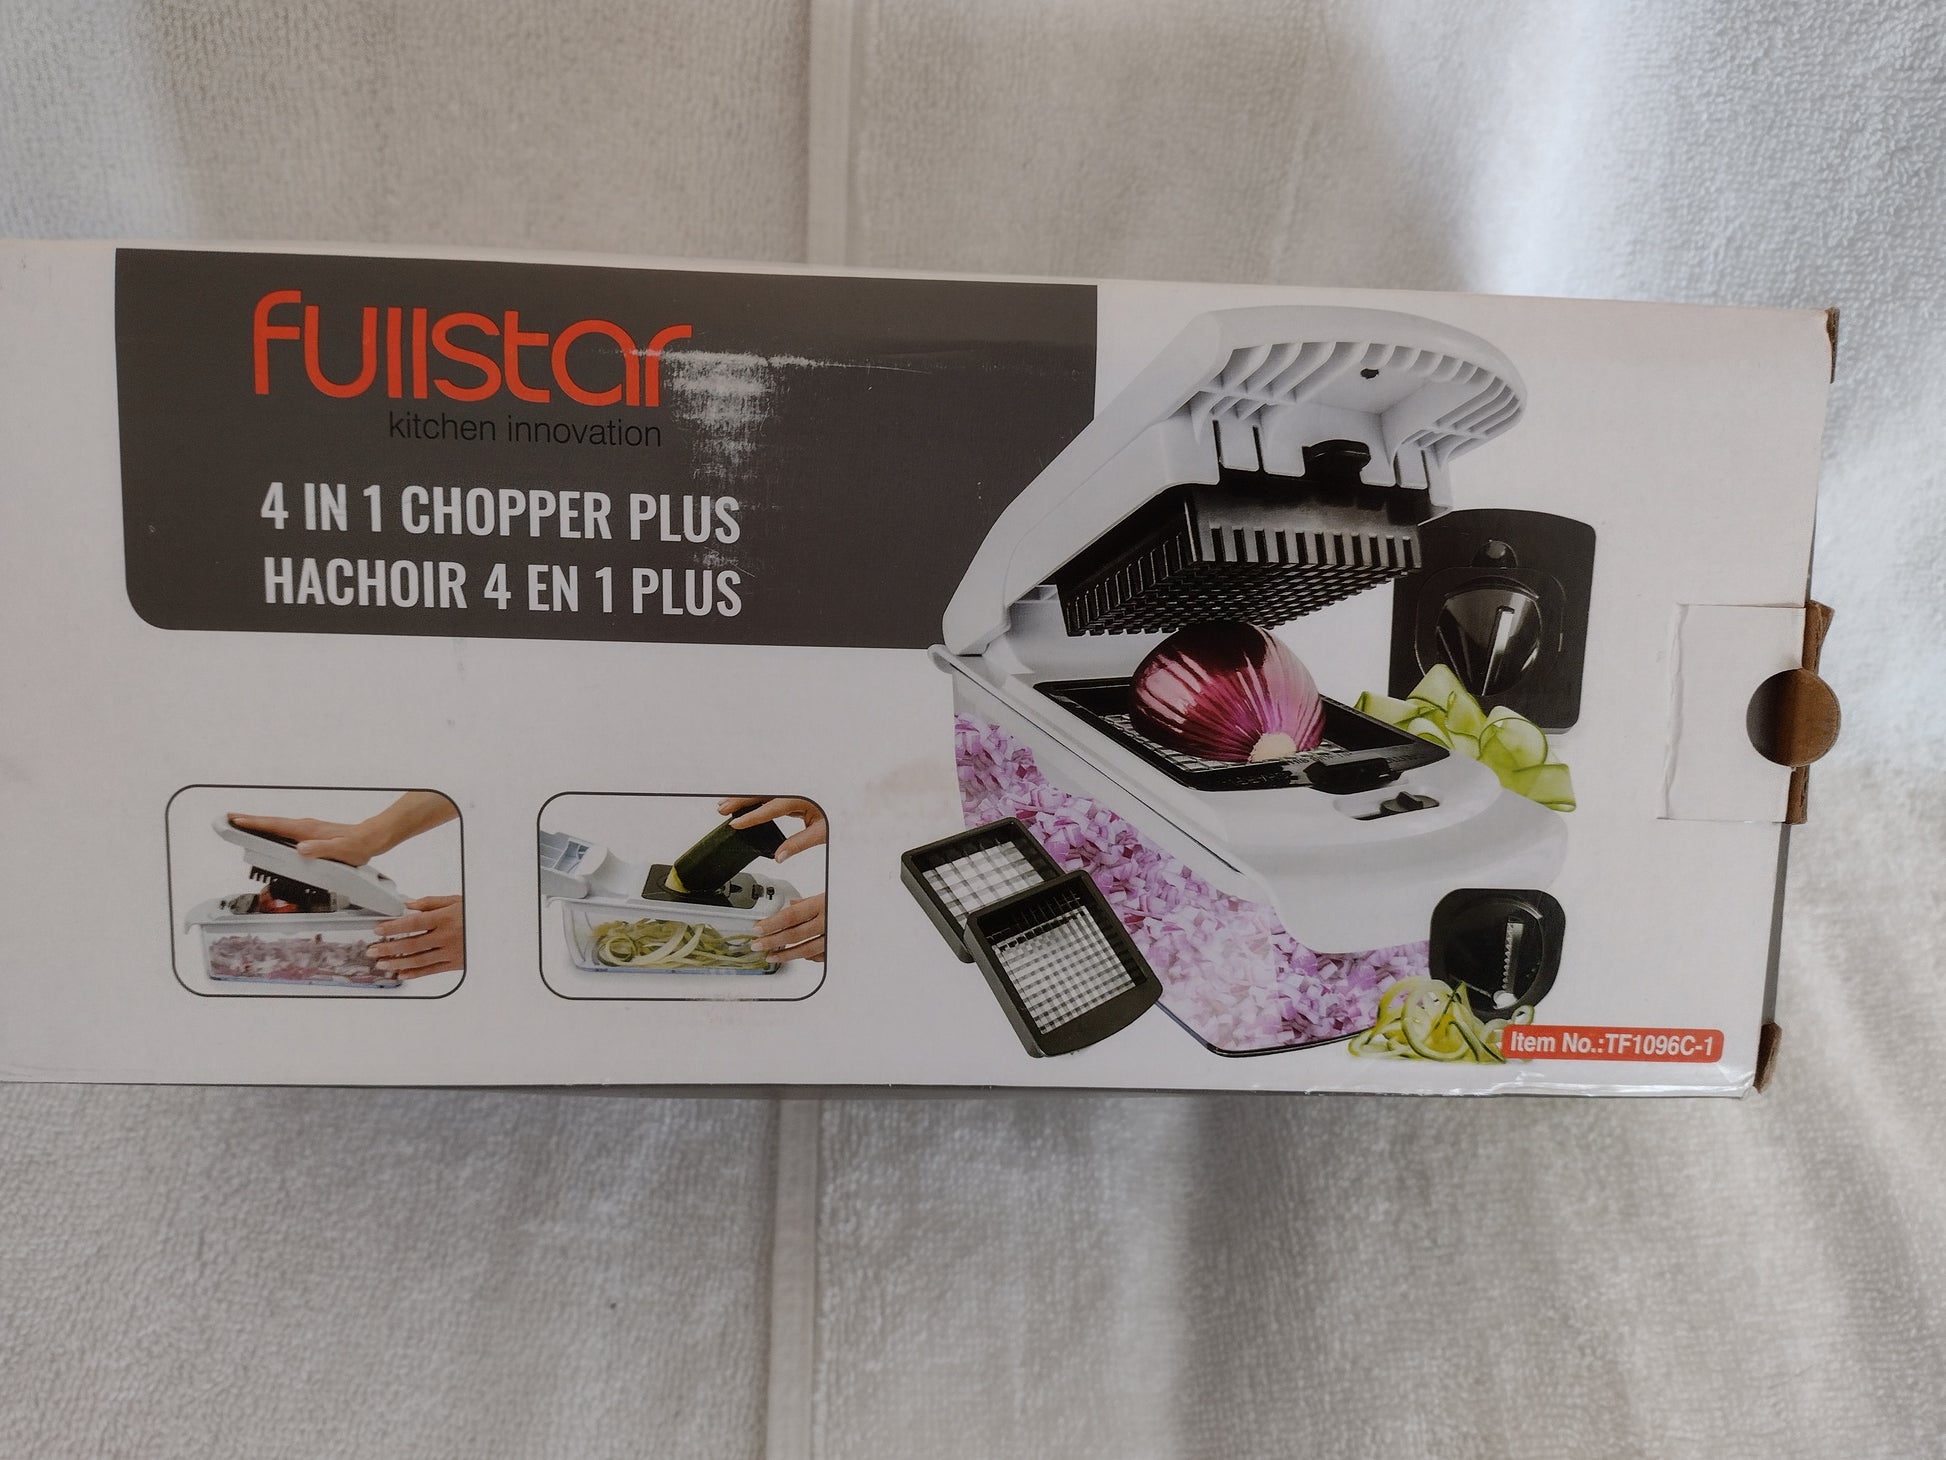 Fullstar 4 in 1 Chopper Plus – Deep Discount Sales